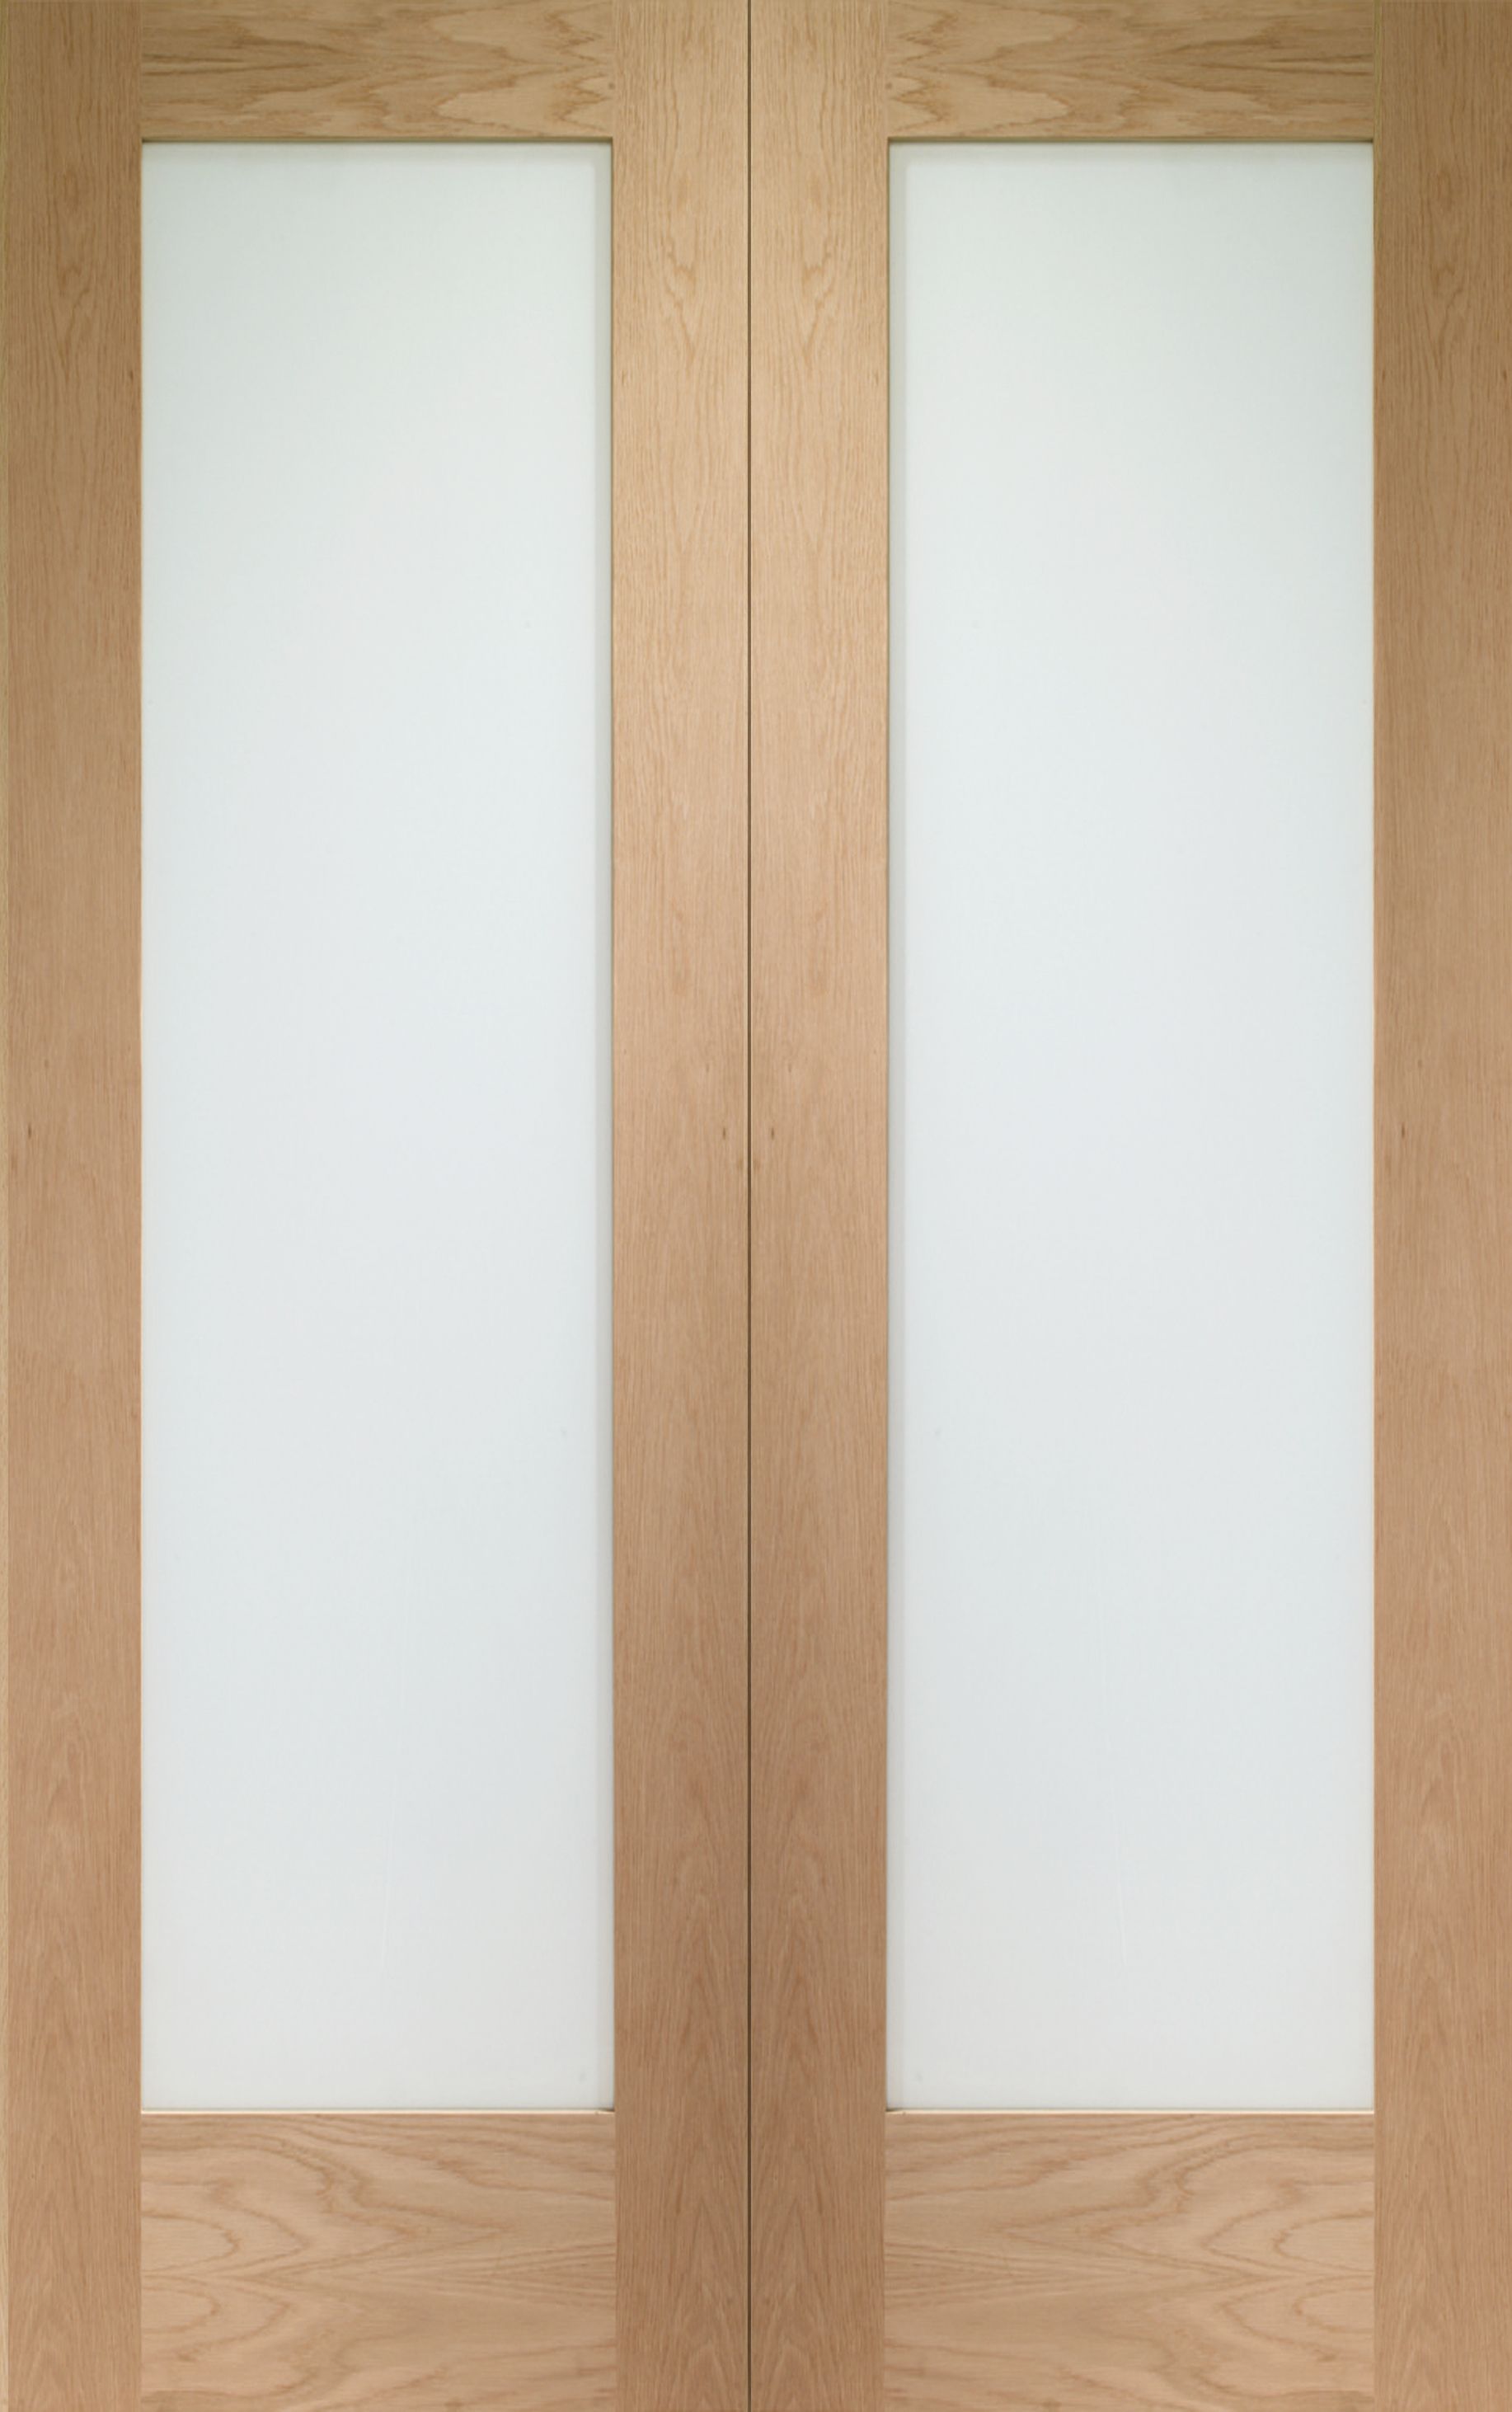 Image of Wickes Oxford Fully Glazed Rebated Internal Oak French Doors - 1981 x 1168mm